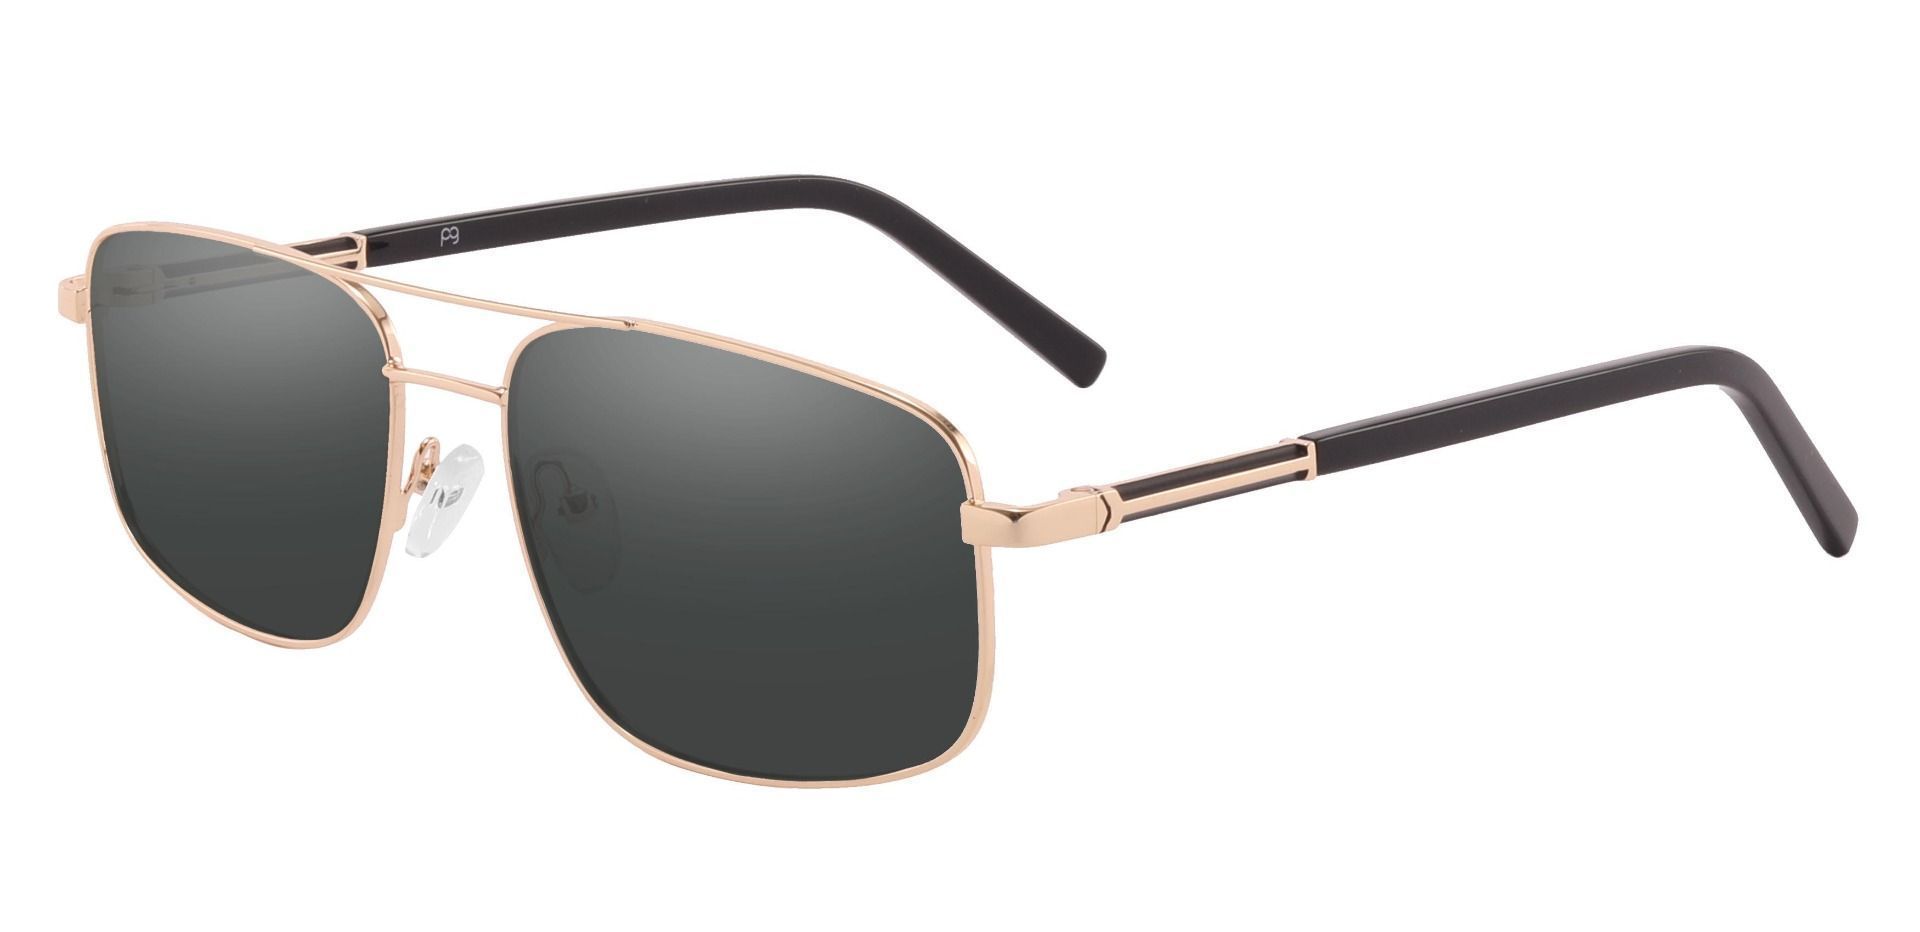 Davenport Aviator Prescription Sunglasses - Gold Frame With Gray Lenses